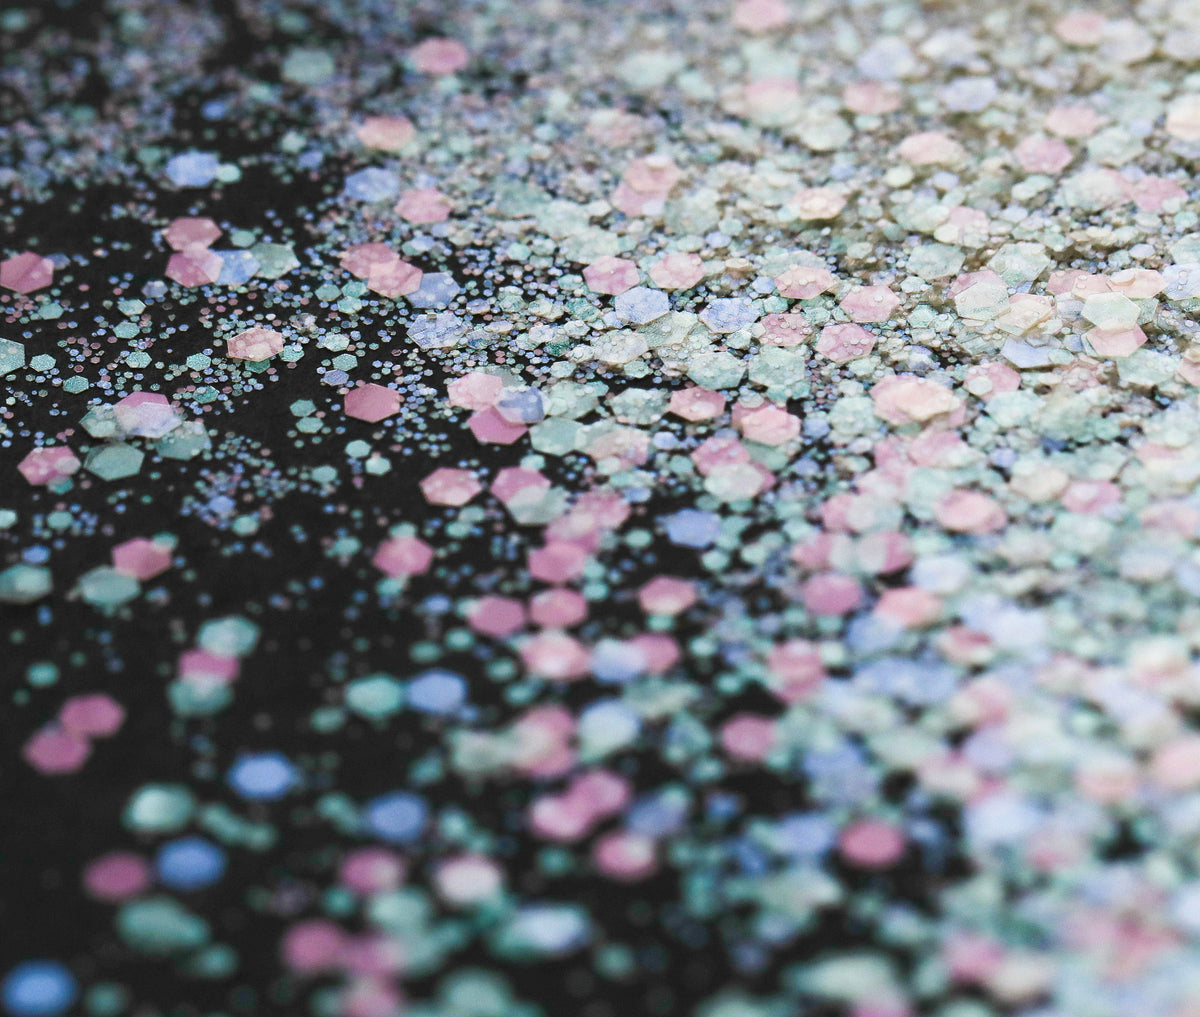 Diamond Dust Biodegradable Glitter by BioGlitz – Shop Will Beauty